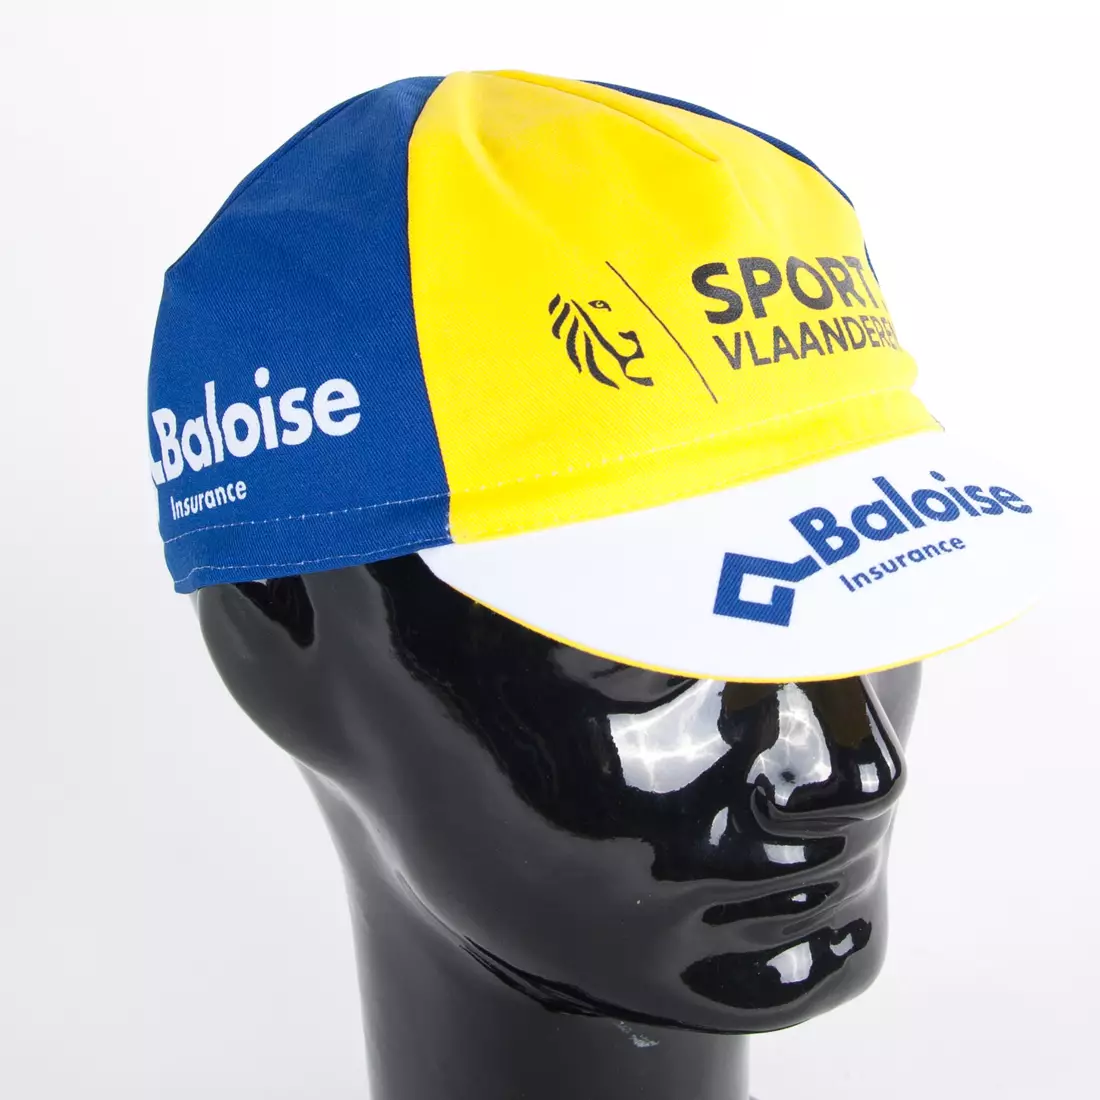 Apis Profi cycling cap SPORT vlaanderen Baloise Insurance blue yellow white visor